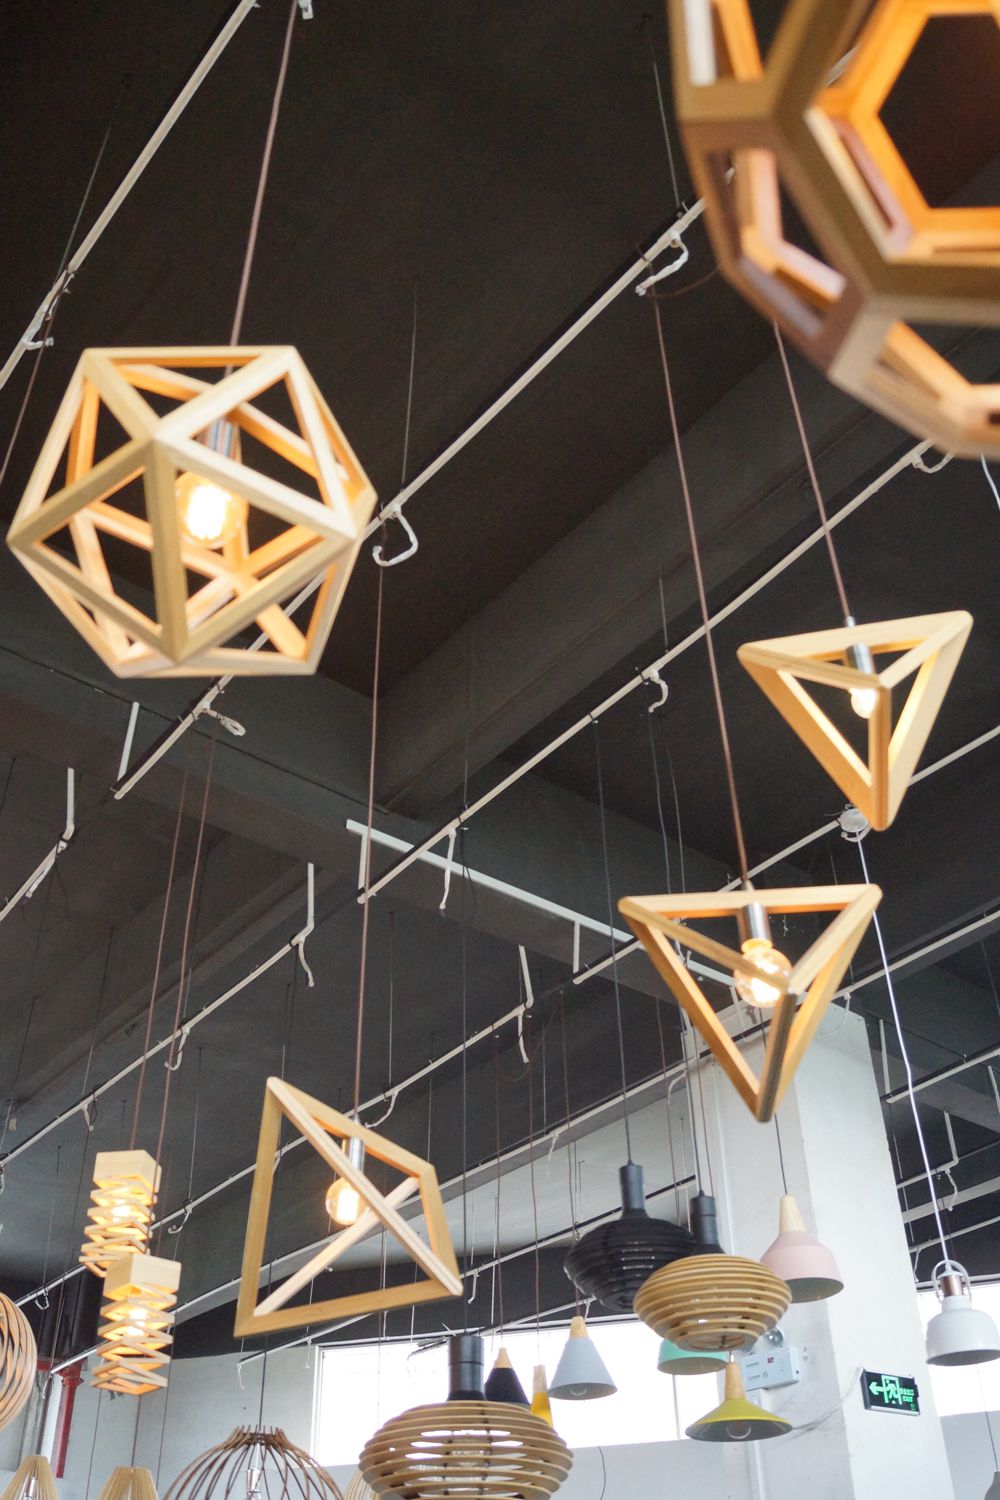 Triangular Design Decorative Indoor Wood Modern Pendant Lights(MD20014-1)